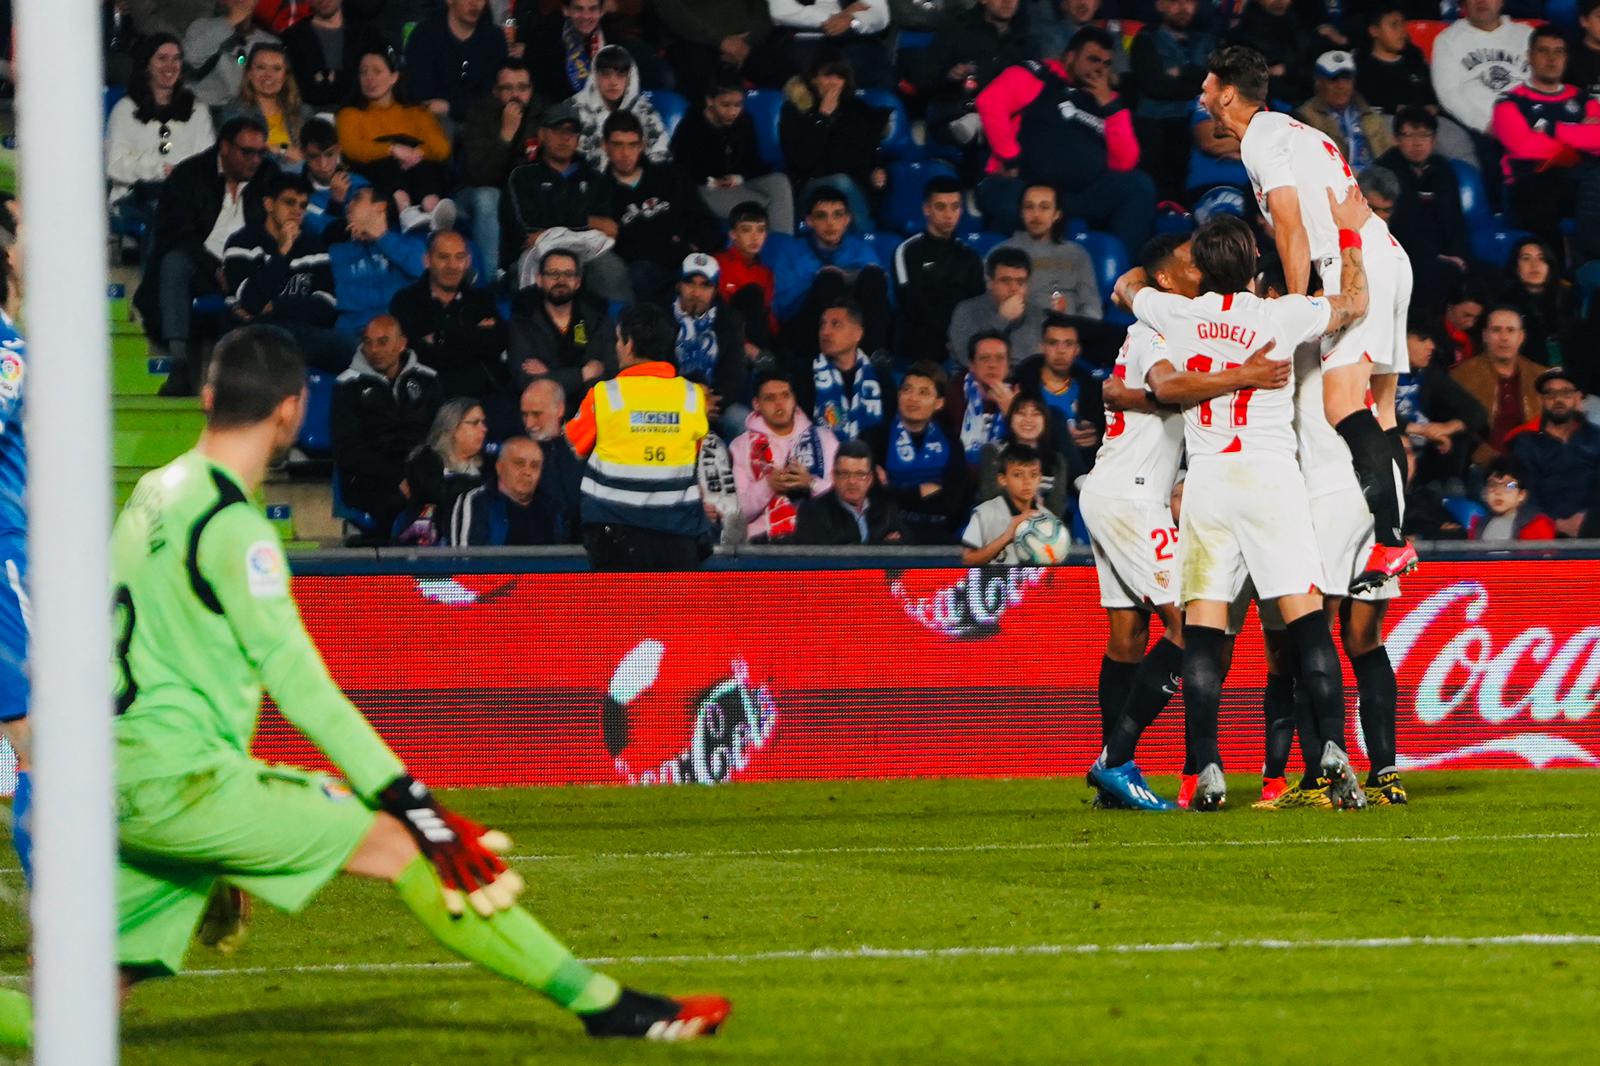 Sevilla FC celebrate a goal against Getafe